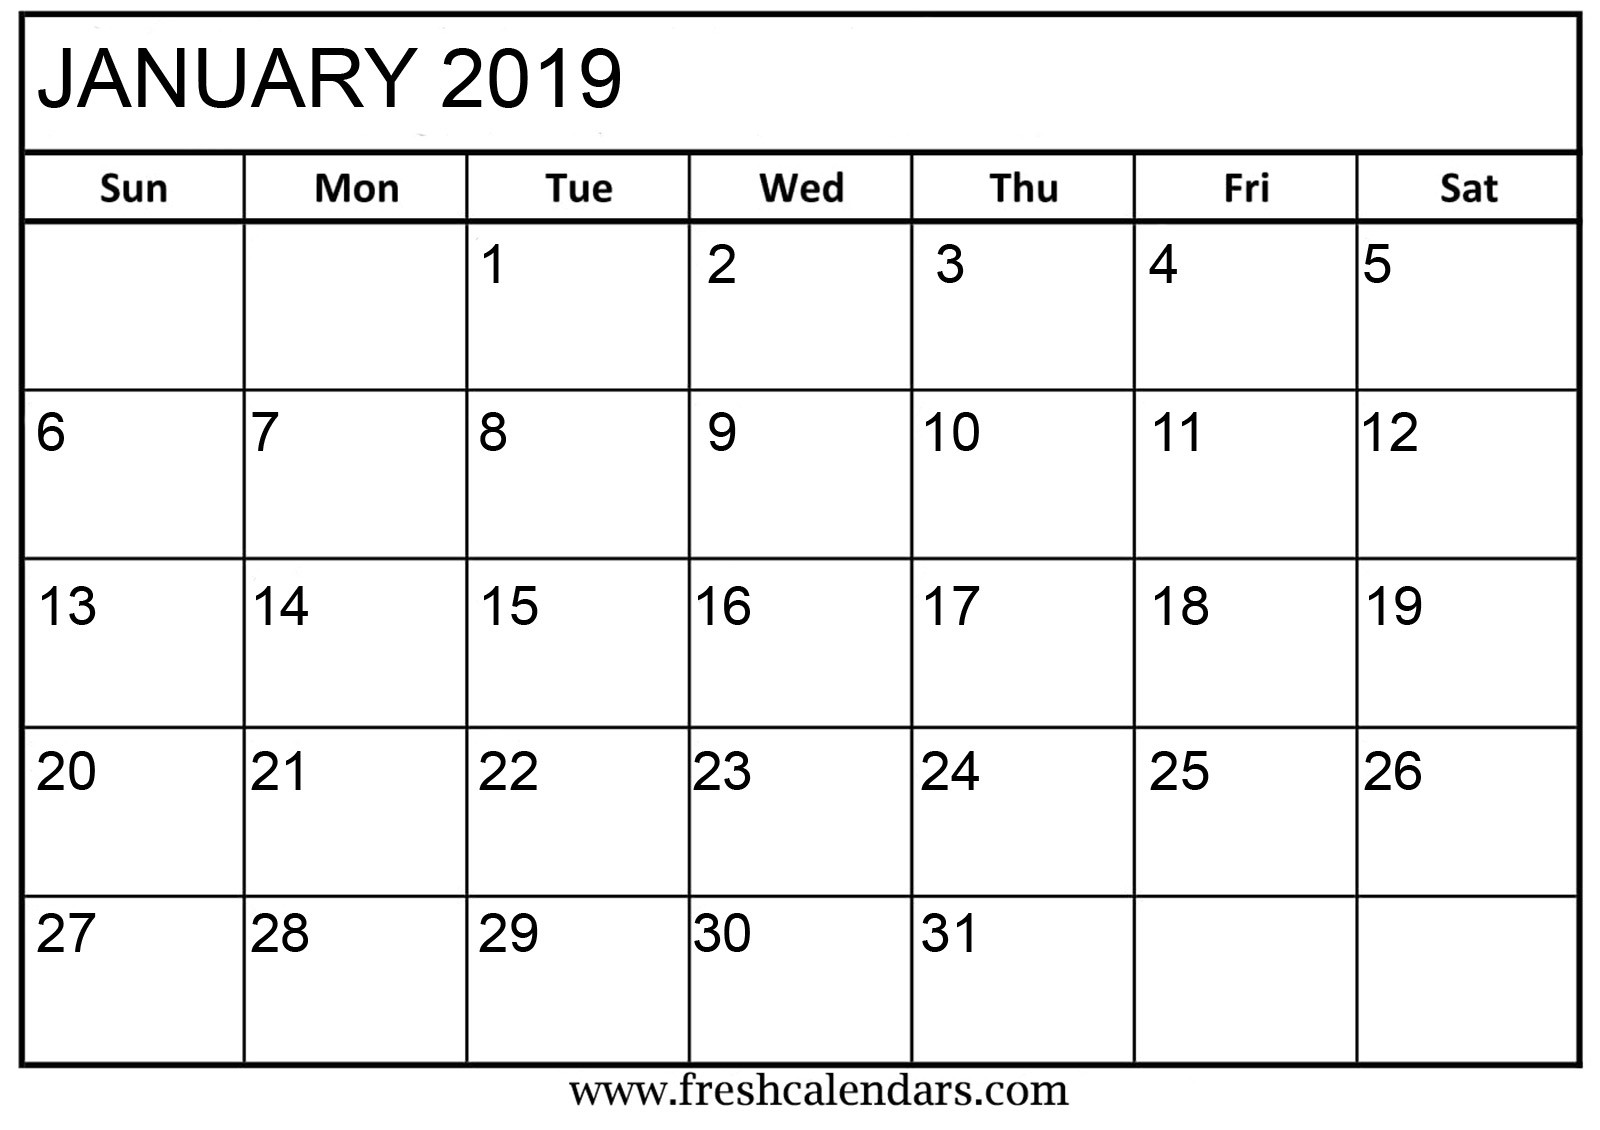 Printable January 2019 Calendar Fresh Calendars